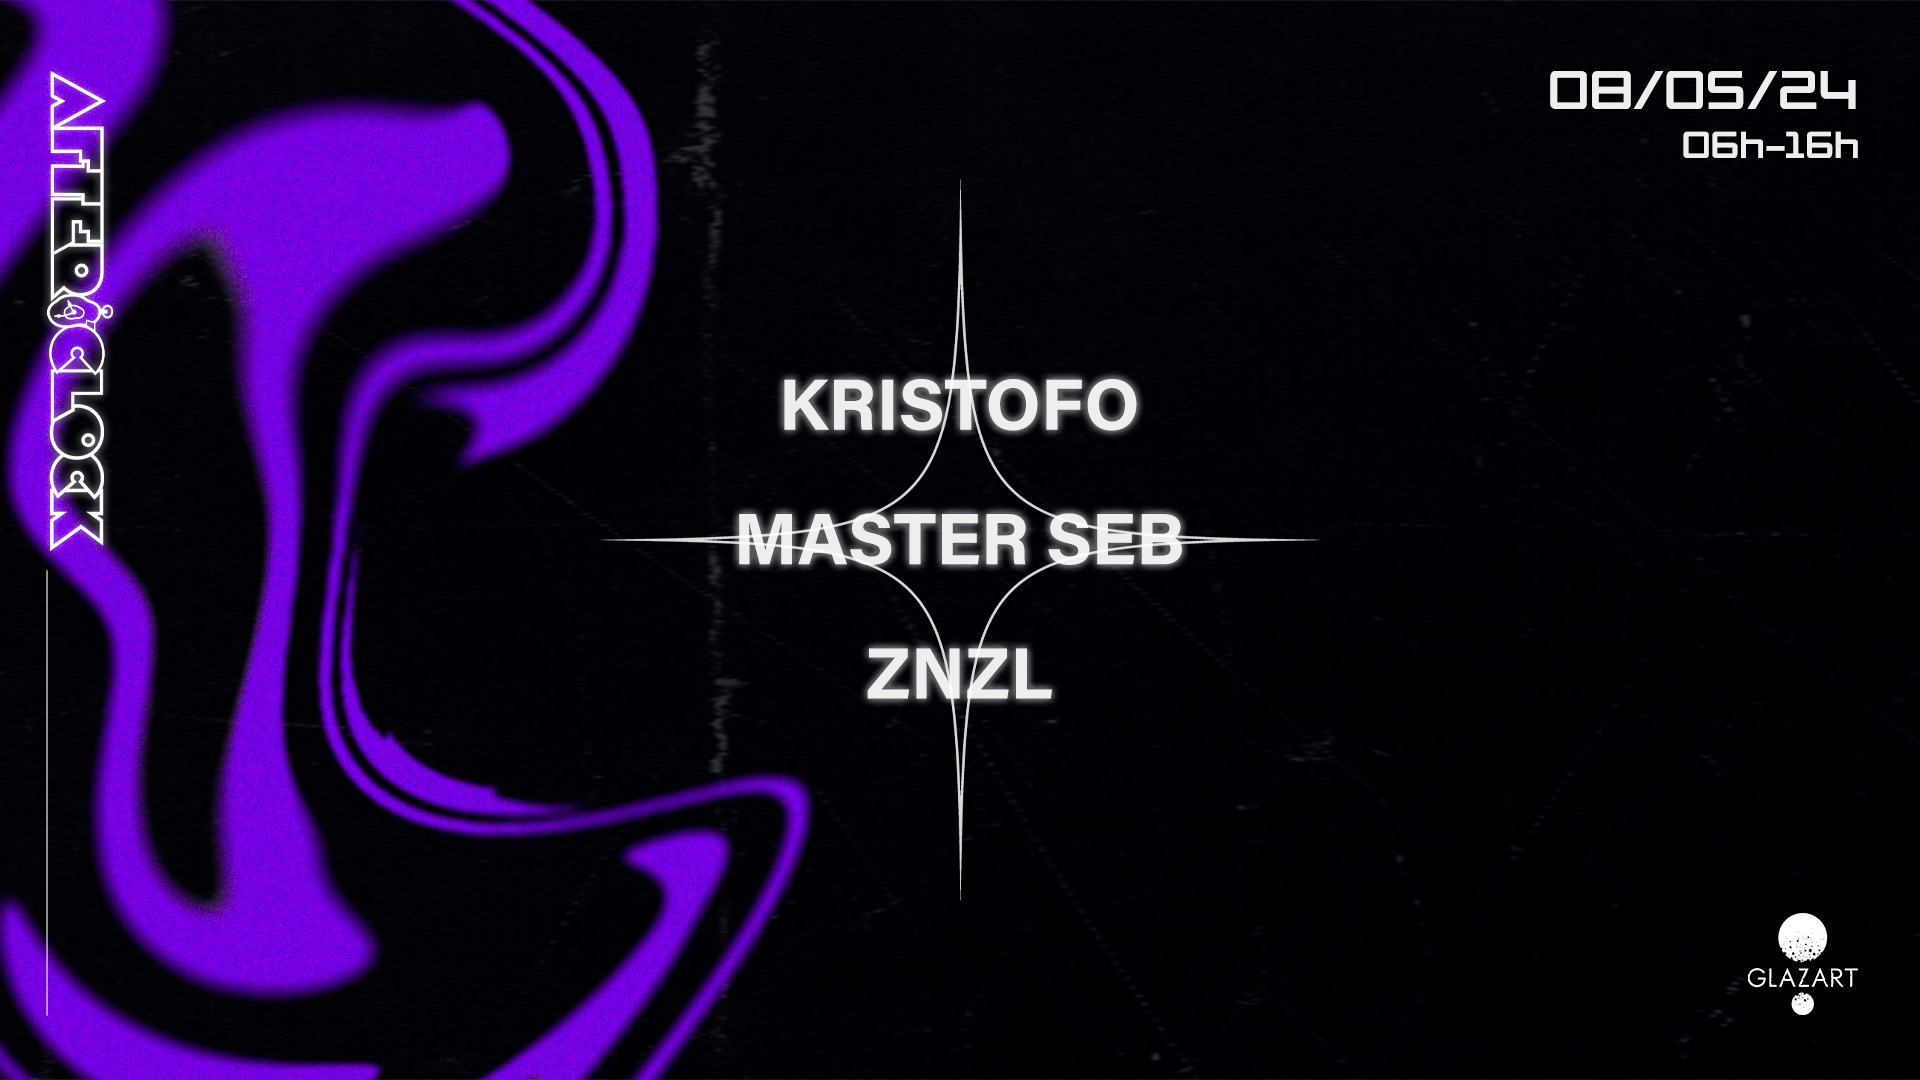 After O'Clock: Znzl, Kristofo, Master Seb - フライヤー表